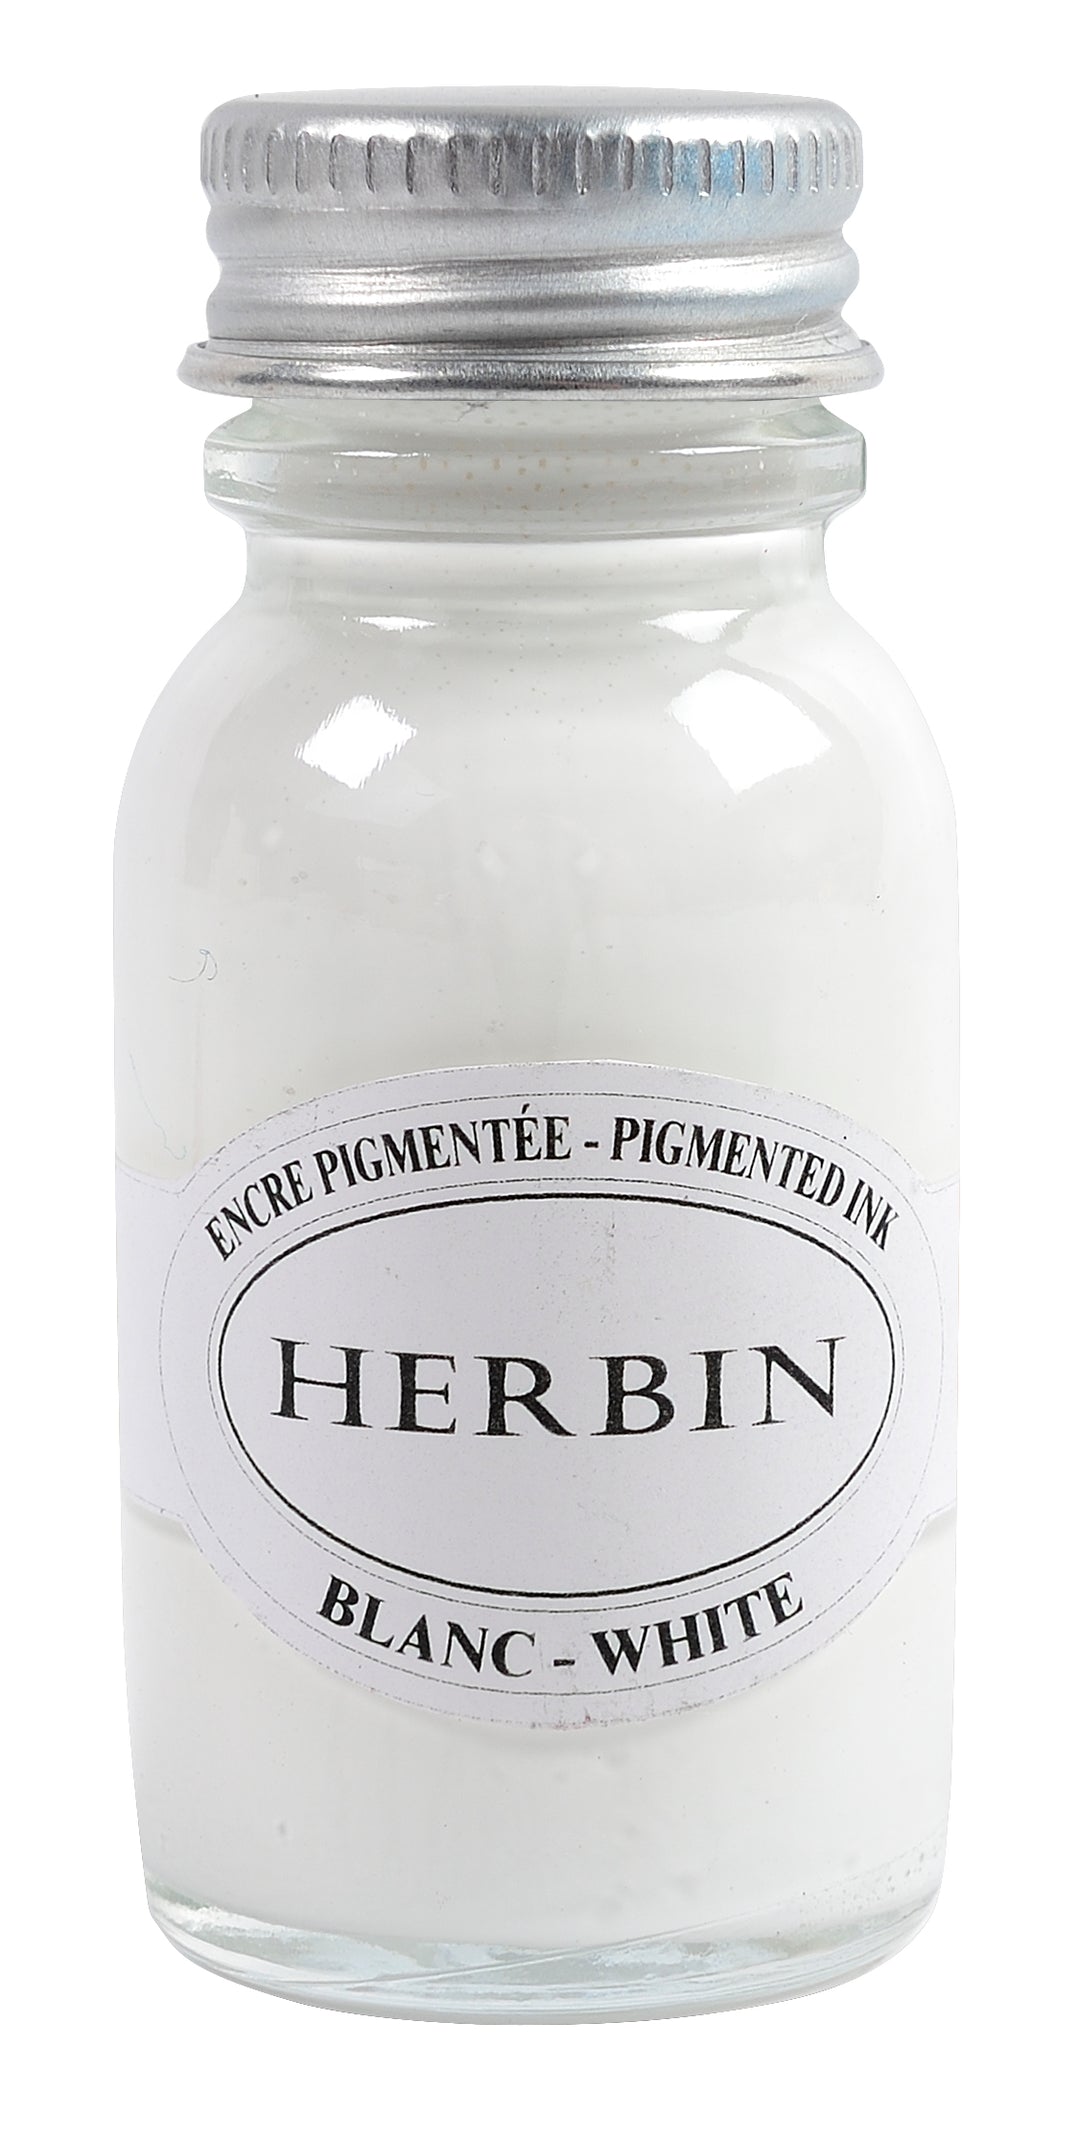 Herbin Pigmented Ink Bottle - Blanc